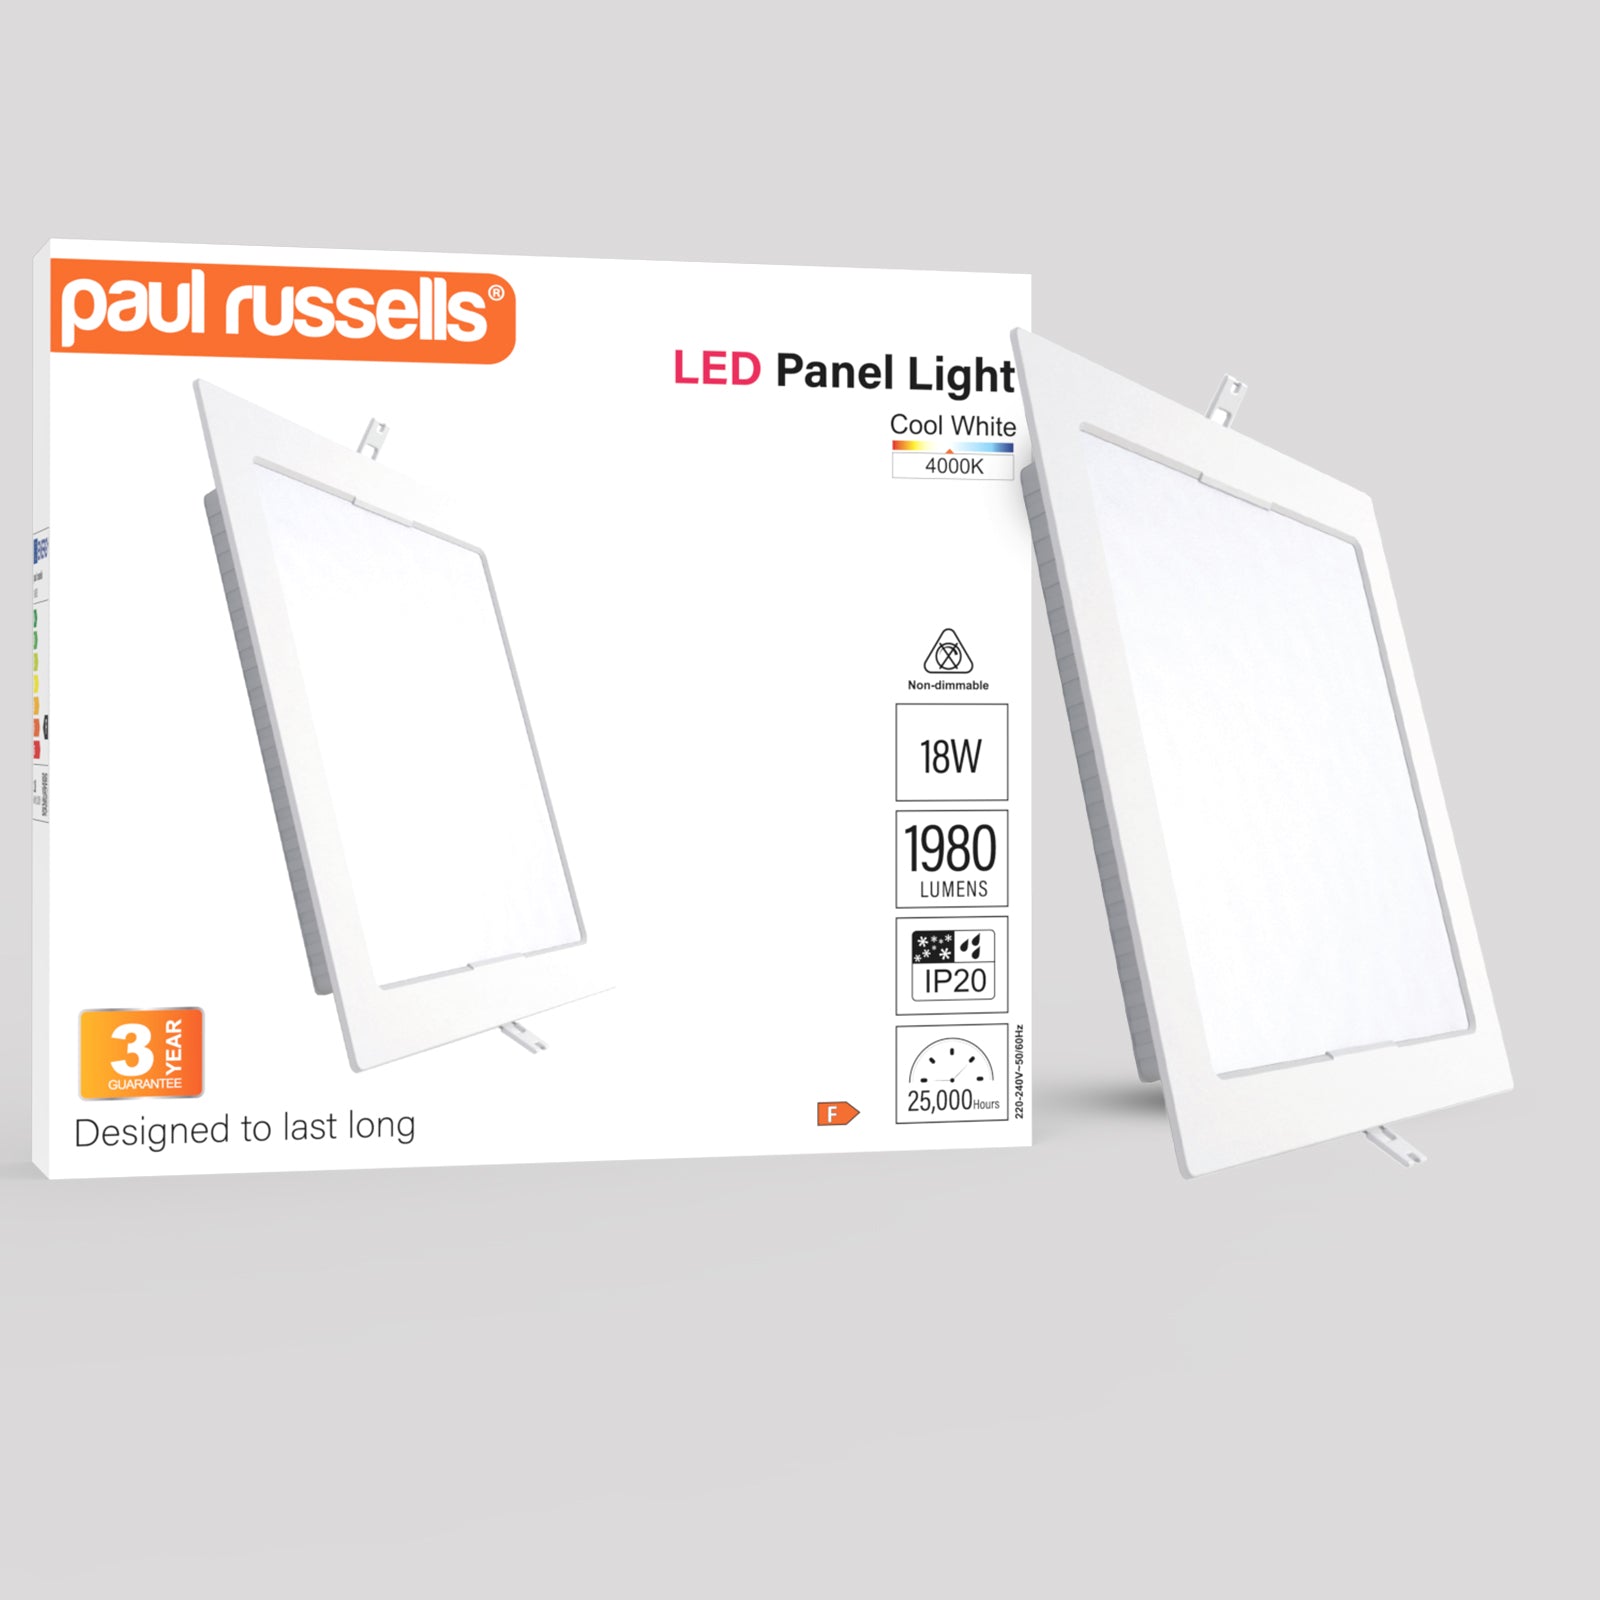 LED Square Panel 18W Cool White Ultra Slim Ceiling Light Bulbs